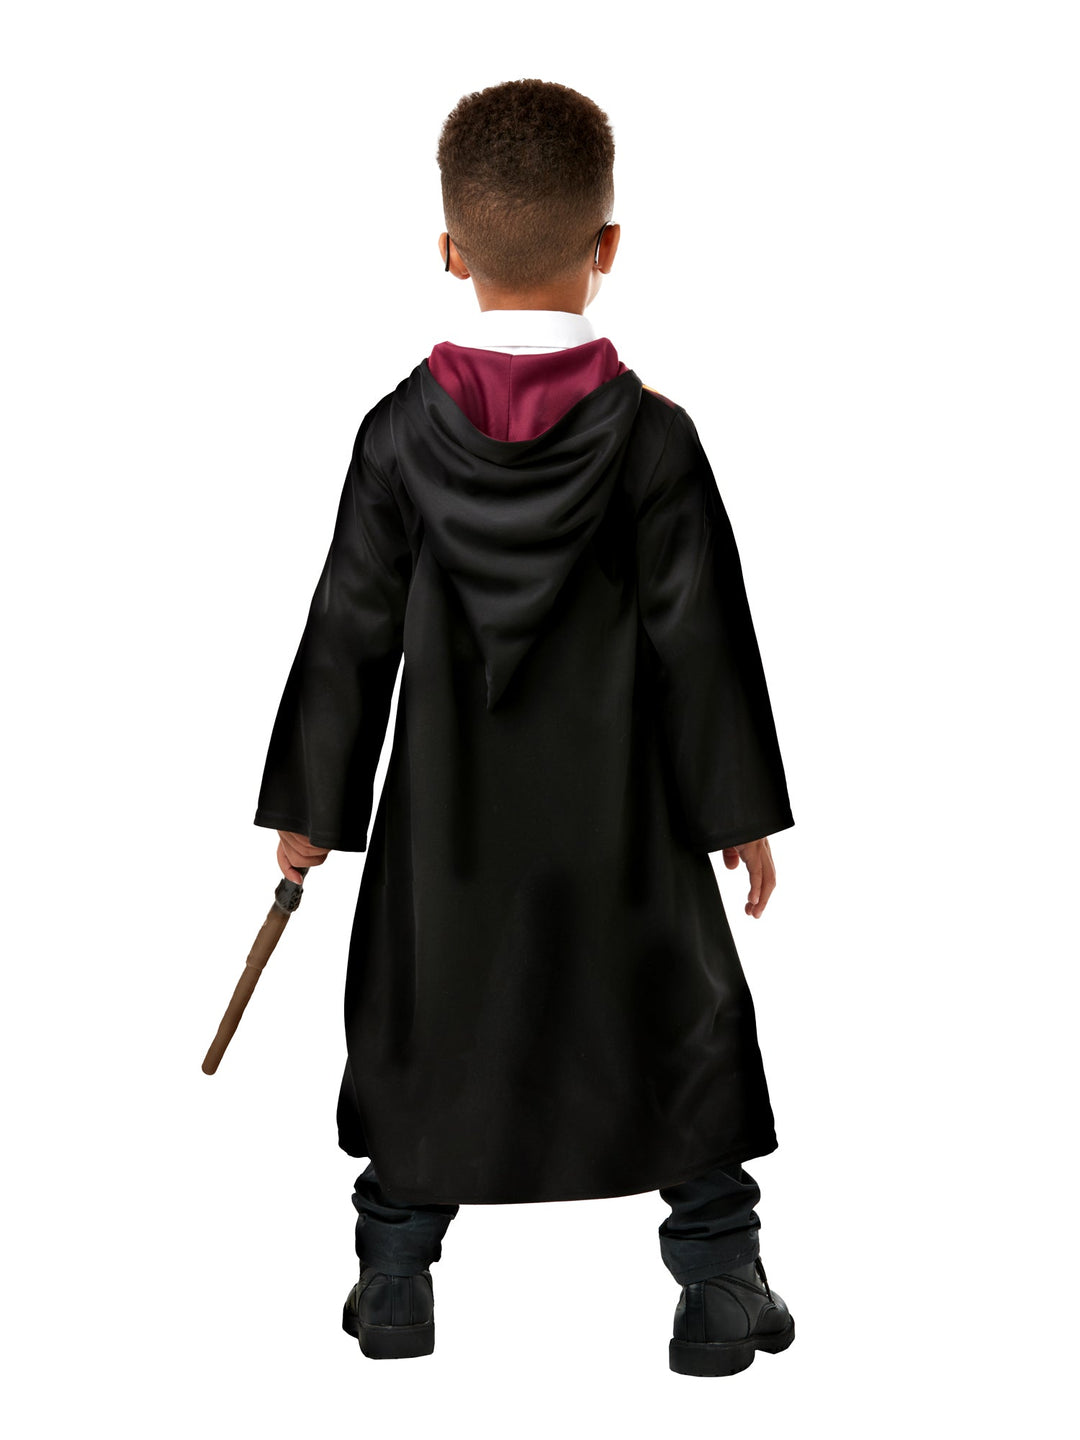 Harry Potter Gryffindor Printed Robe Kids Costume_5